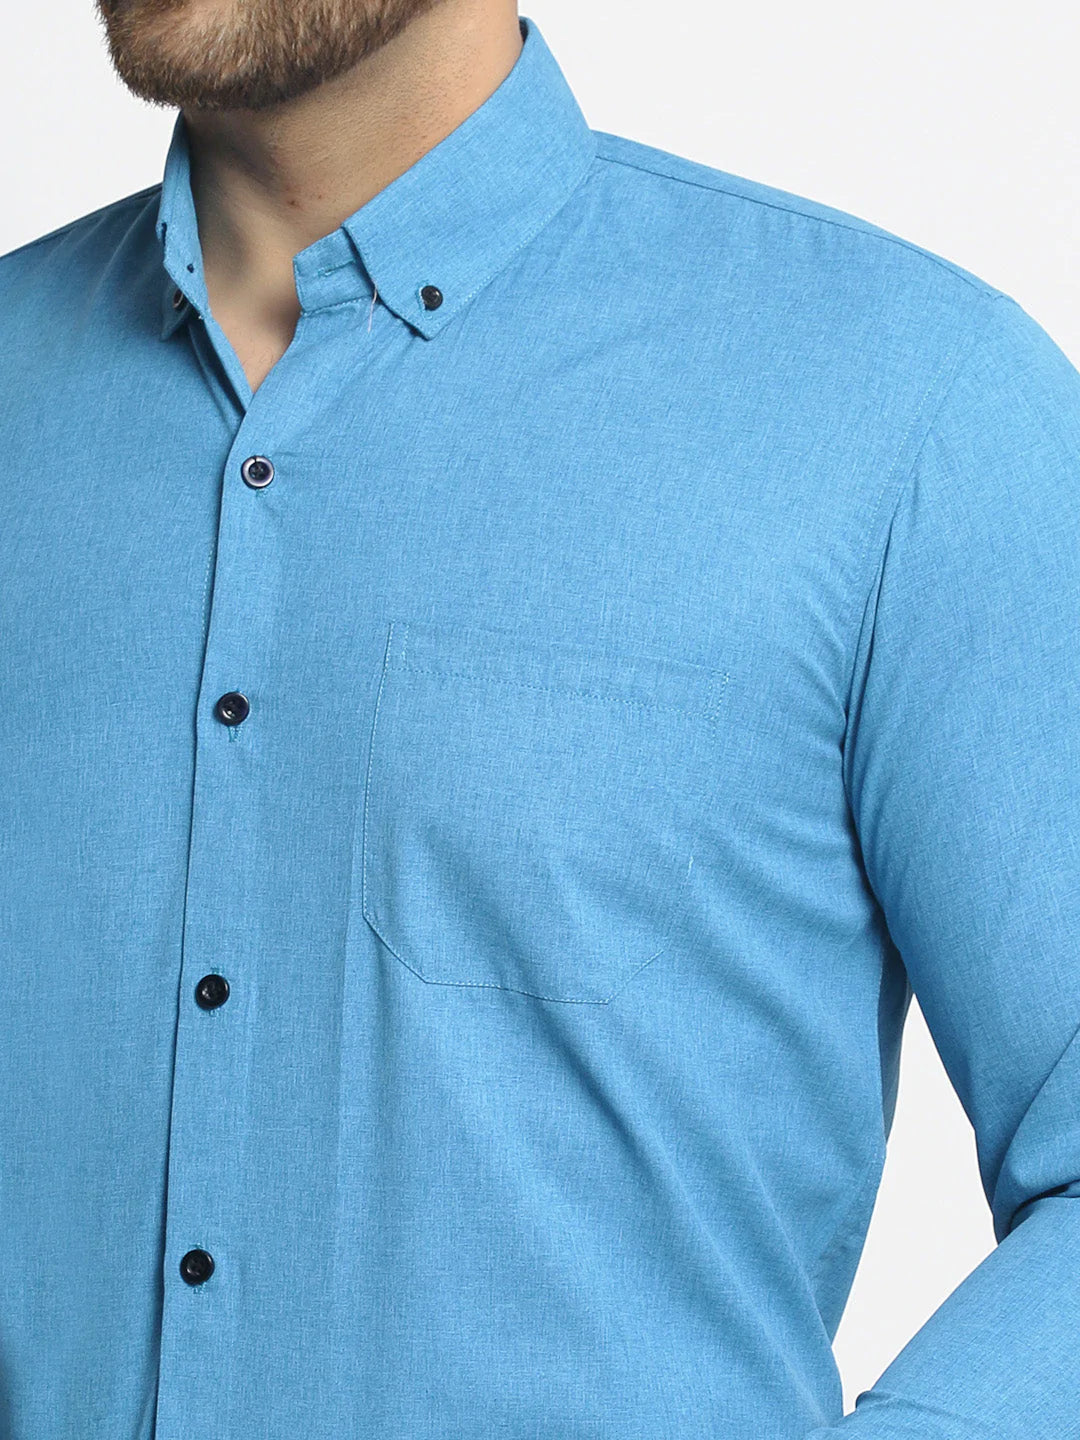 Jainish Blue Men's Cotton Solid Button Down Formal Shirts ( SF 734Sky )